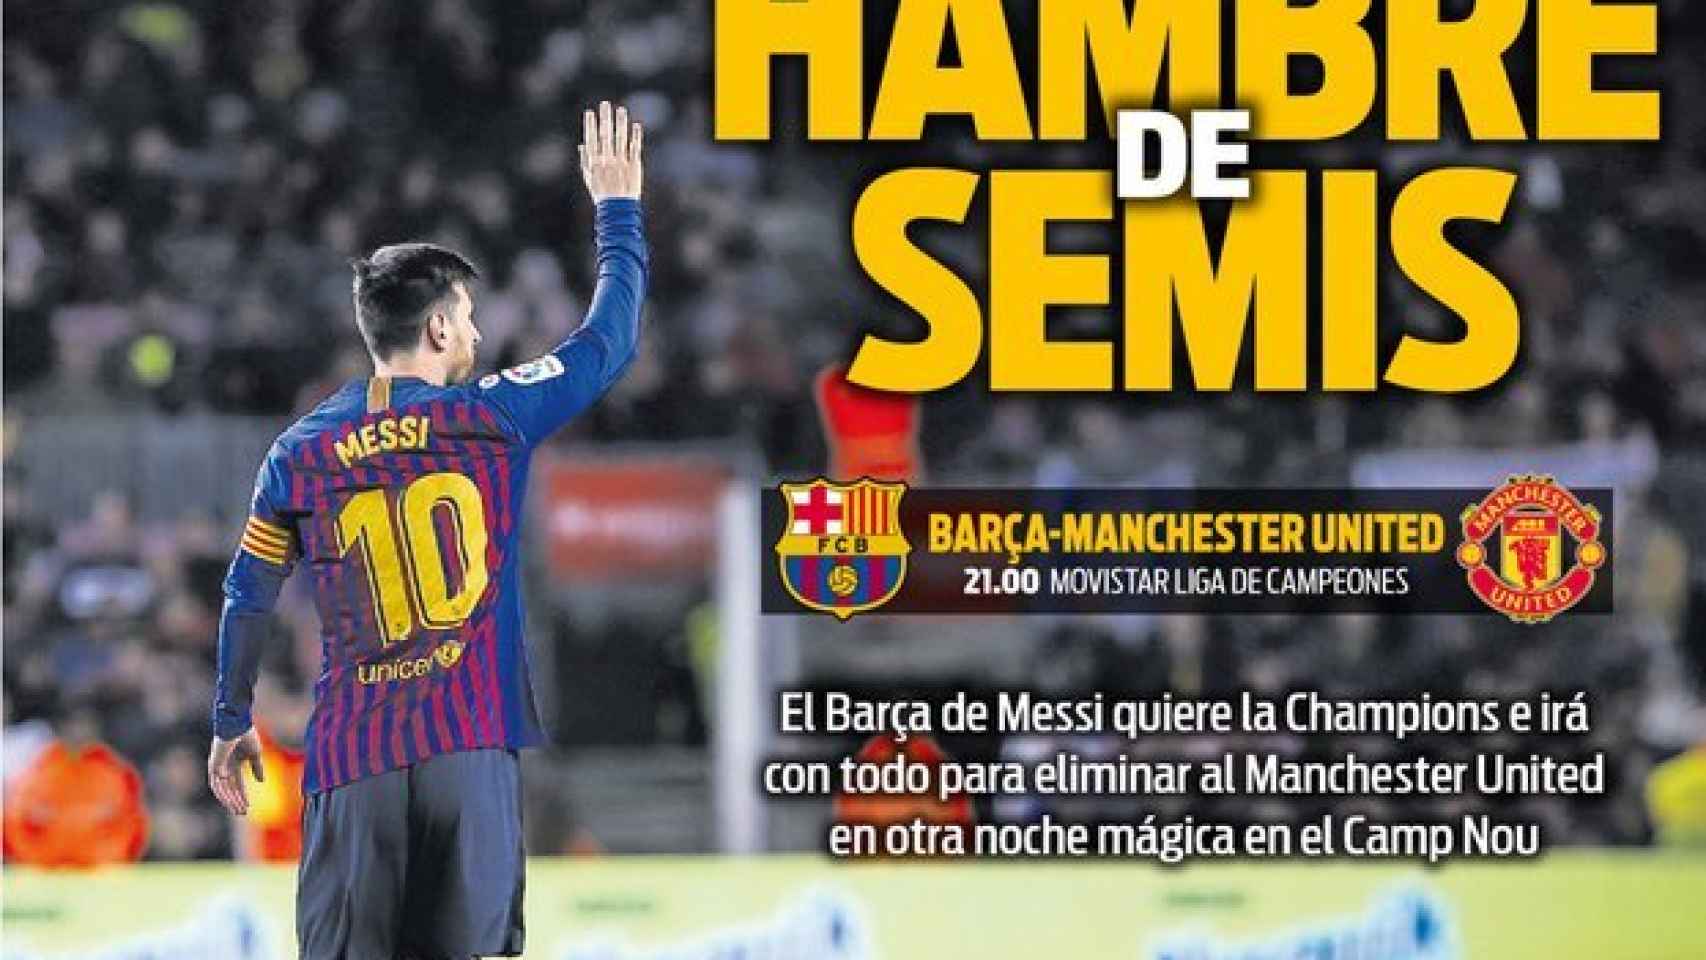 Portada del diario Sport (16/4/2019)